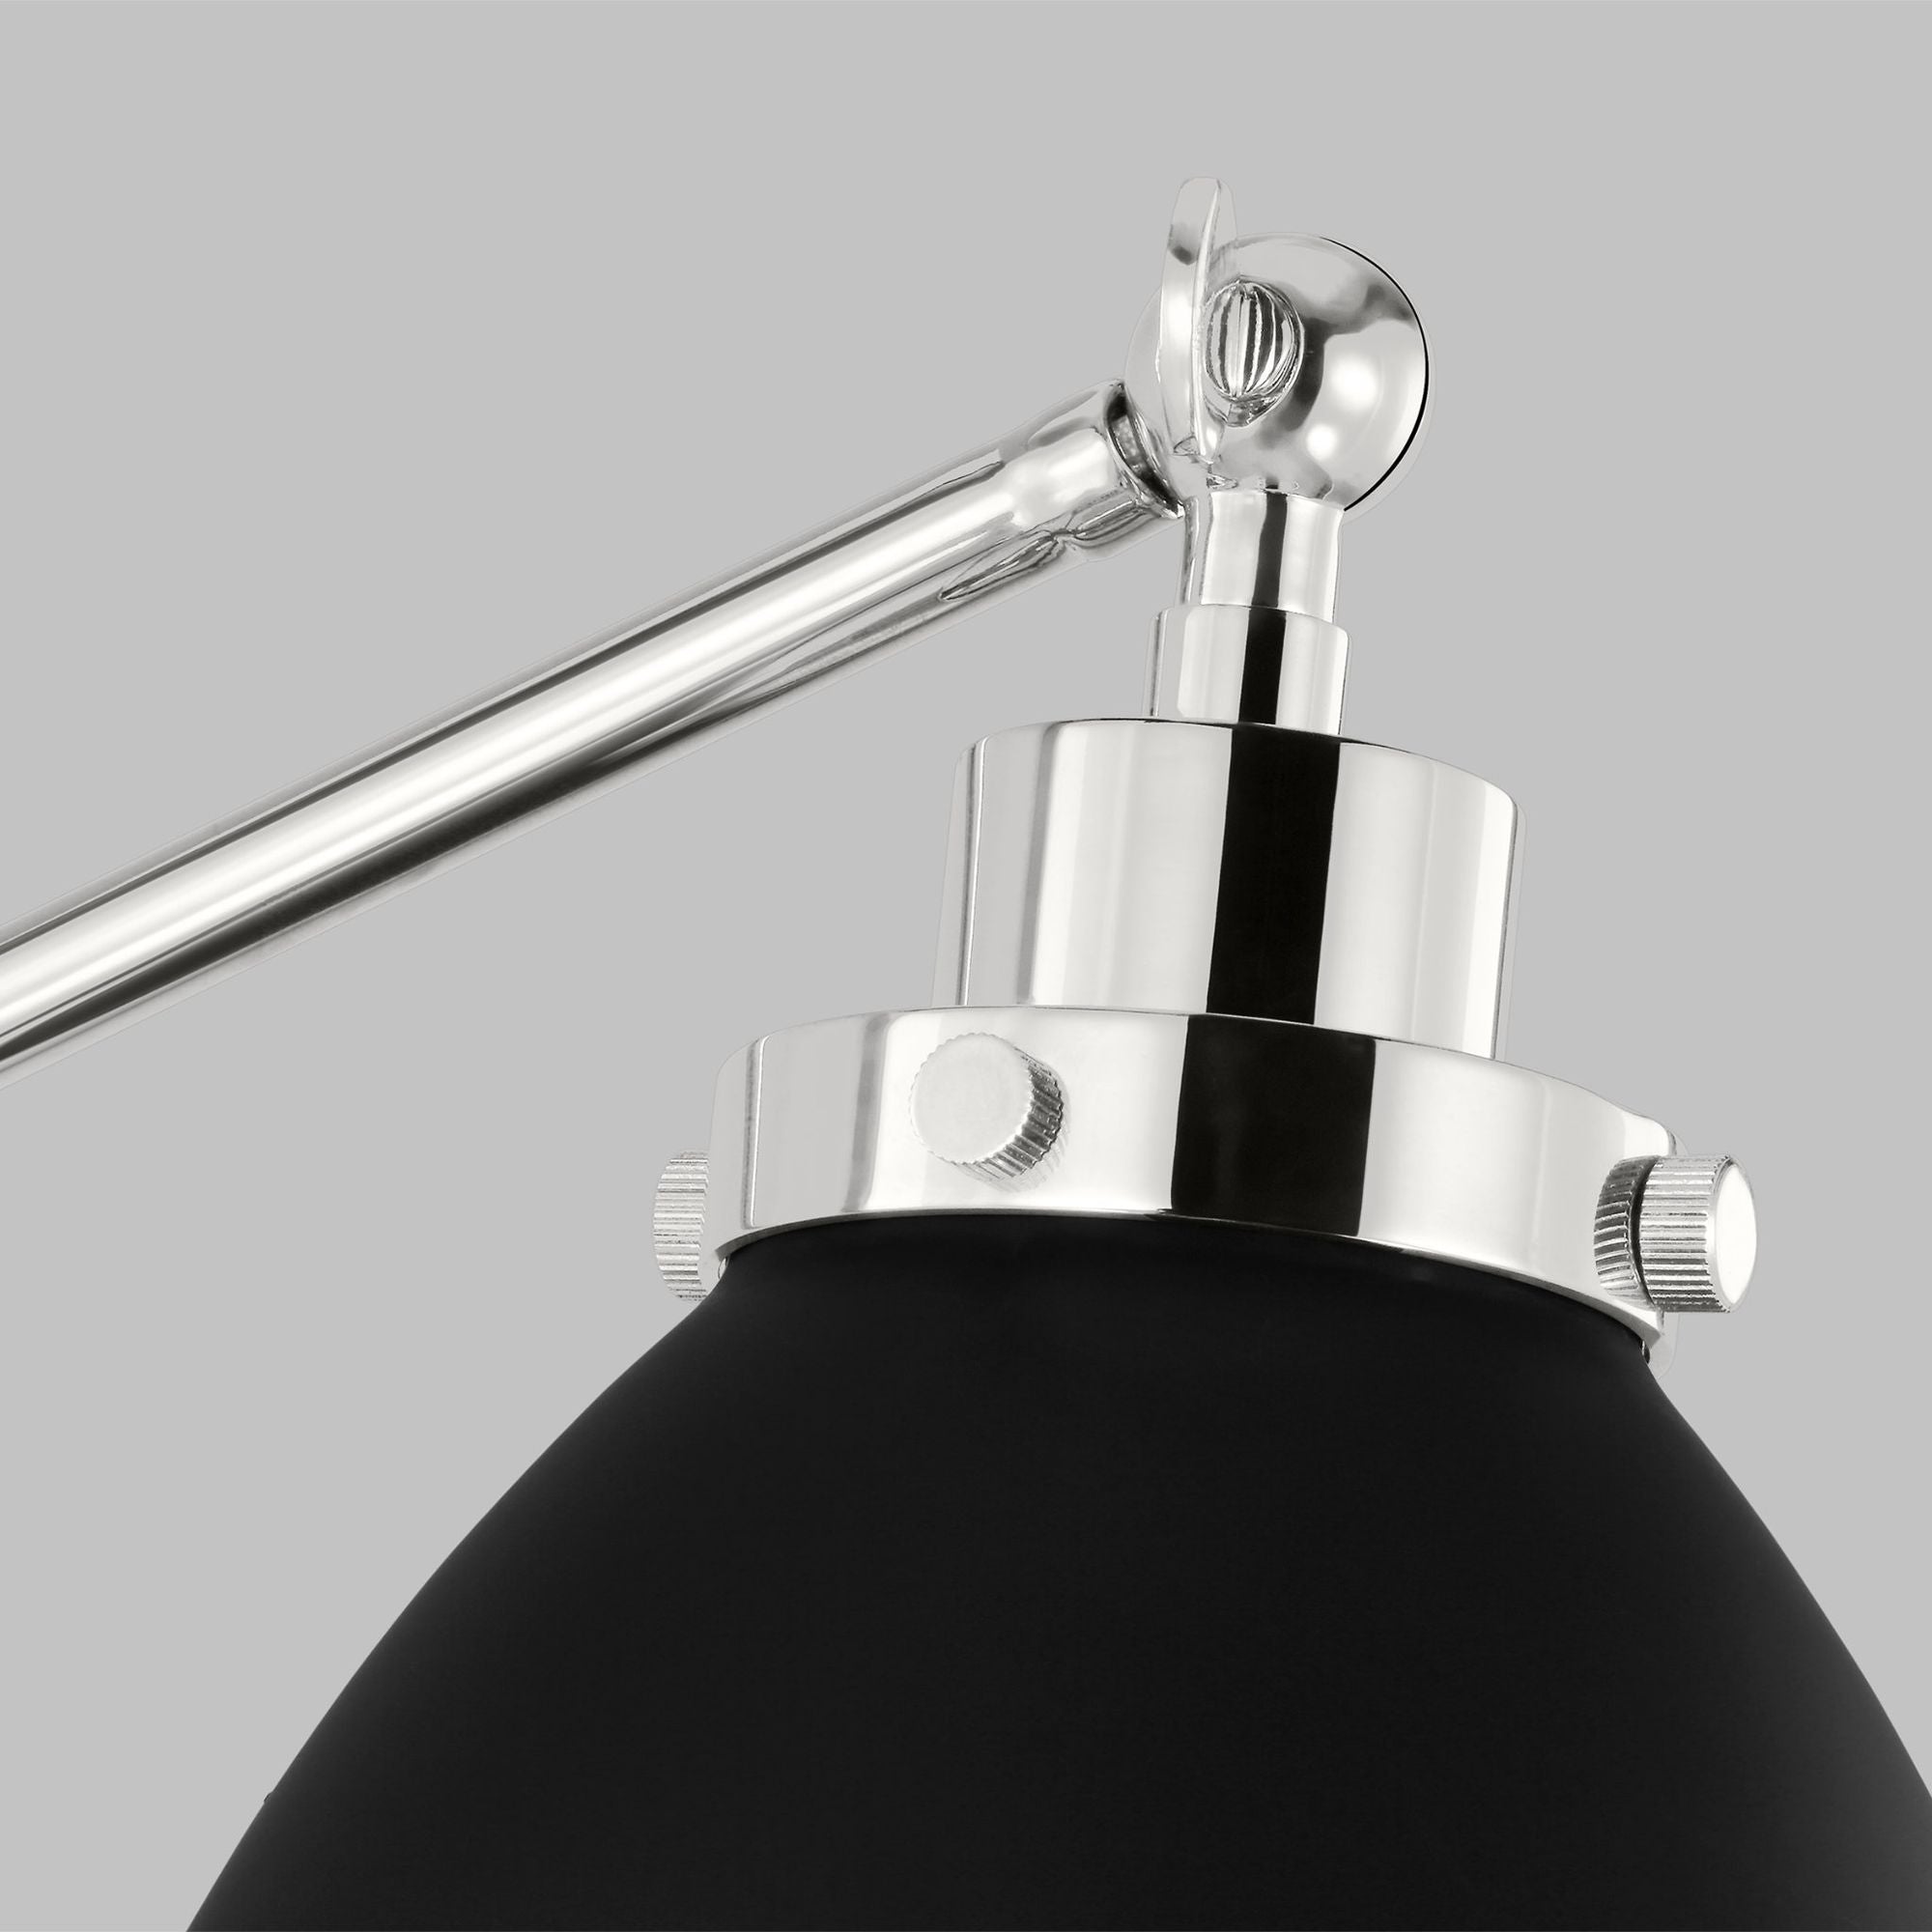 Chapman & Myers Wellfleet Dome Floor Lamp in Midnight Black and Polished Nickel